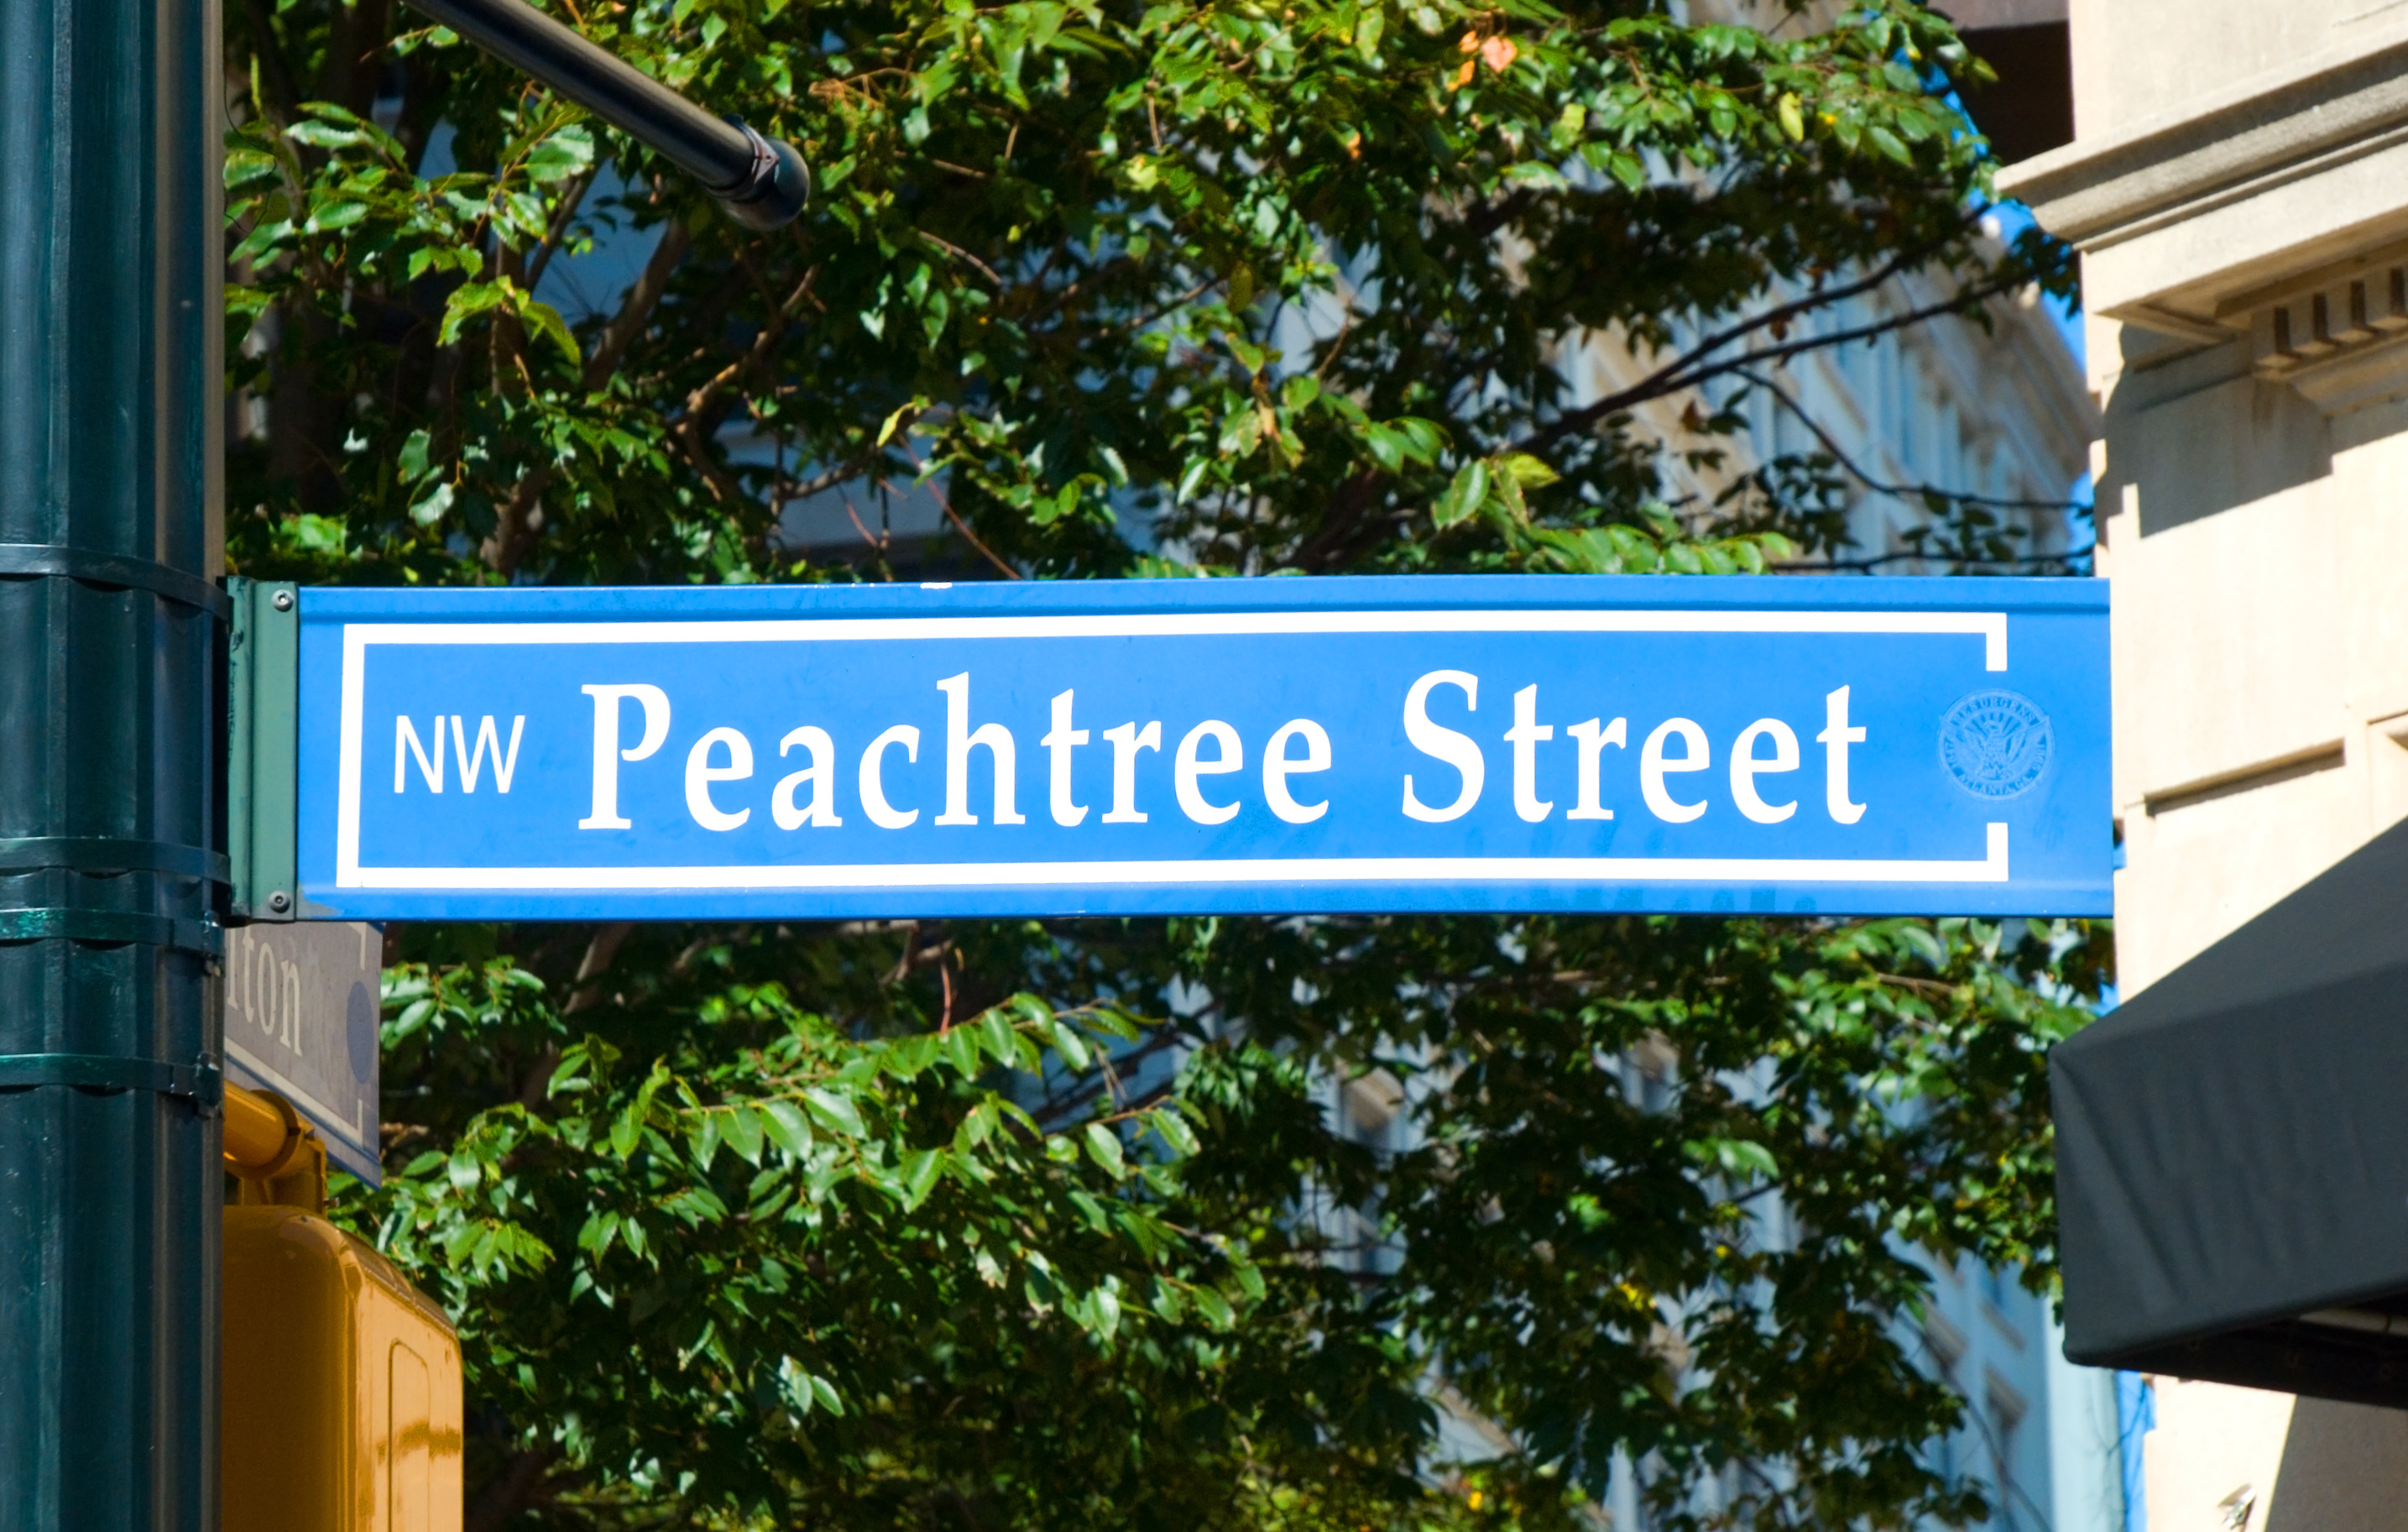 Peachtree Street Sign in Atlanta